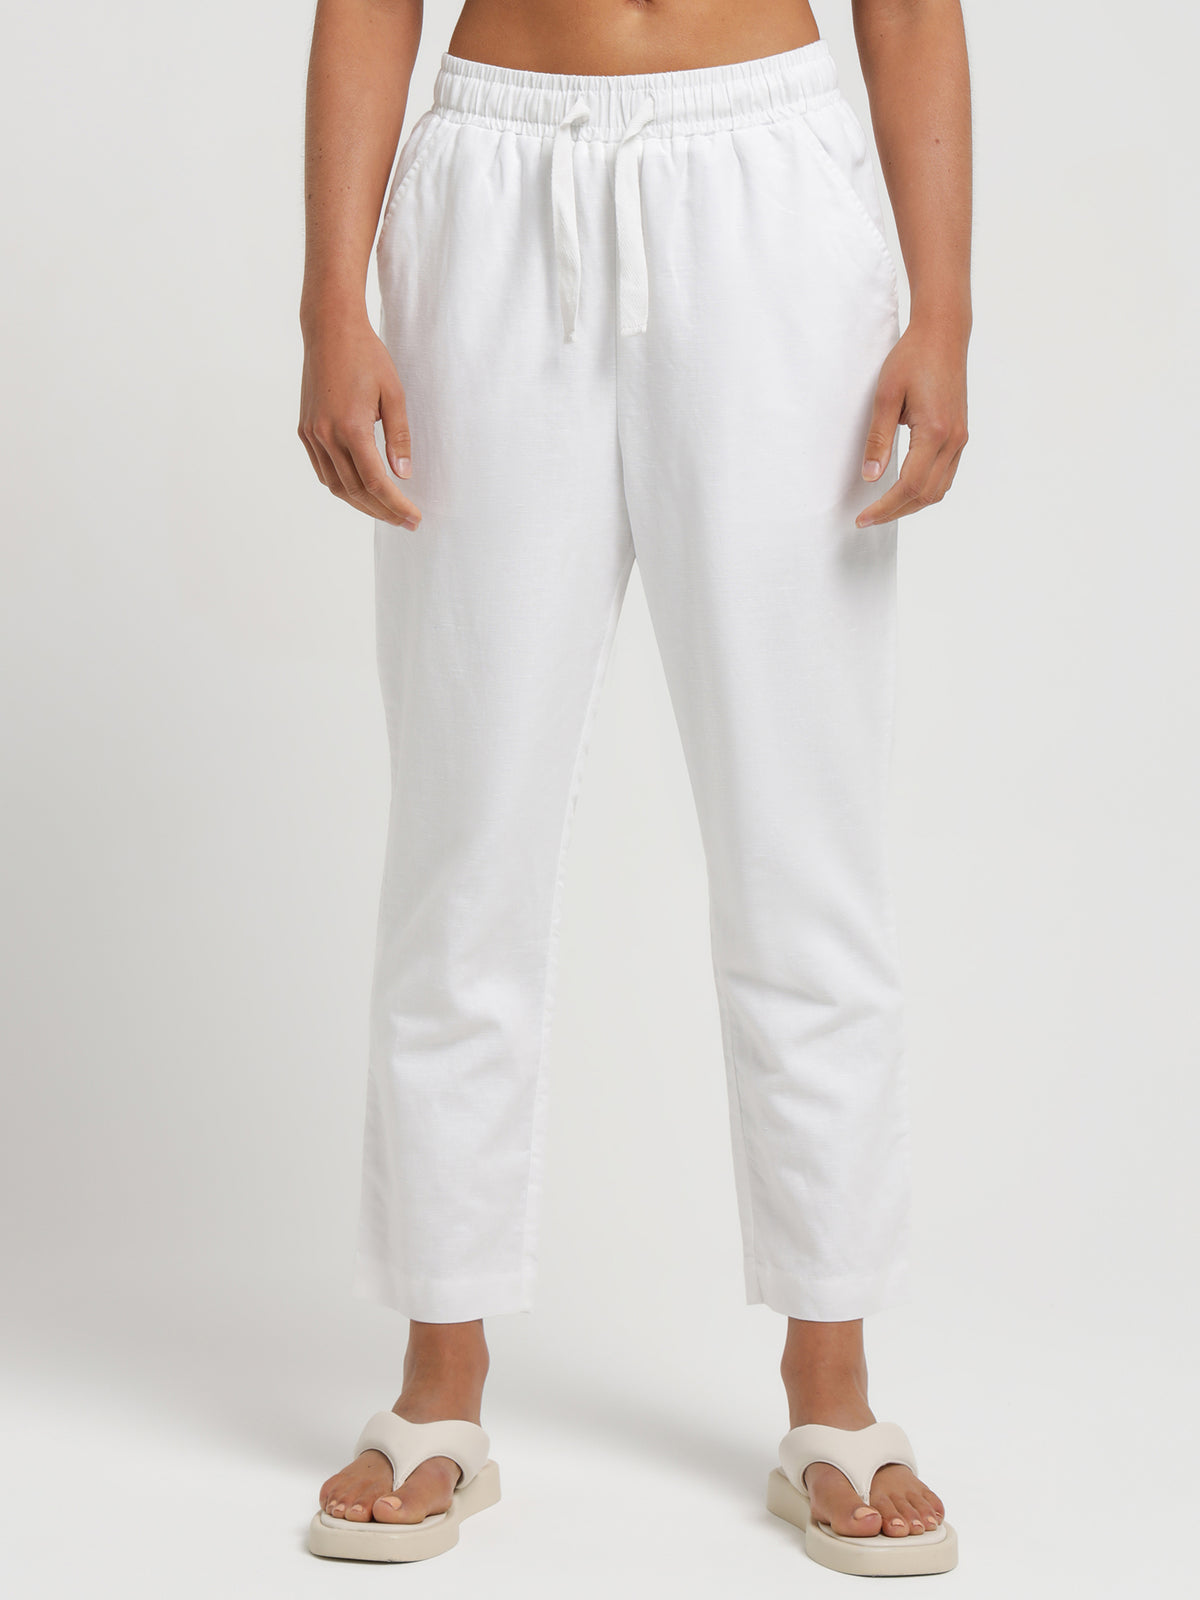 Classic Linen Pants in White Linen